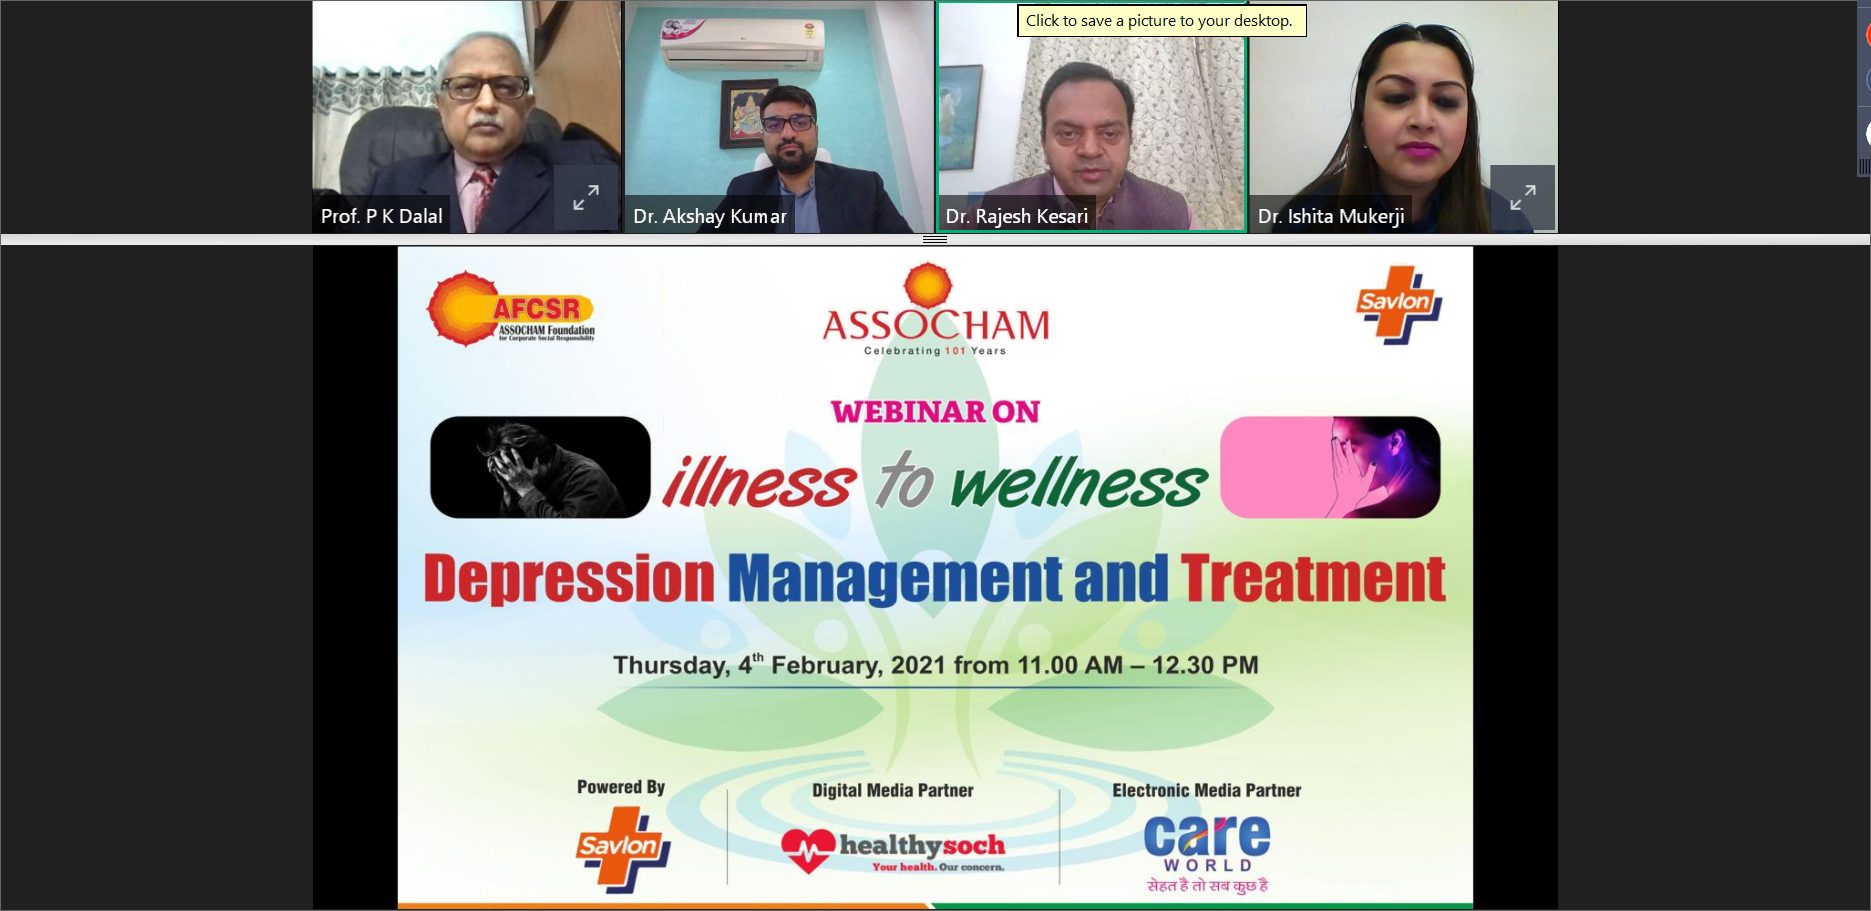 assocham-organized-webinar-series-on-illness-to-wellness-campaign